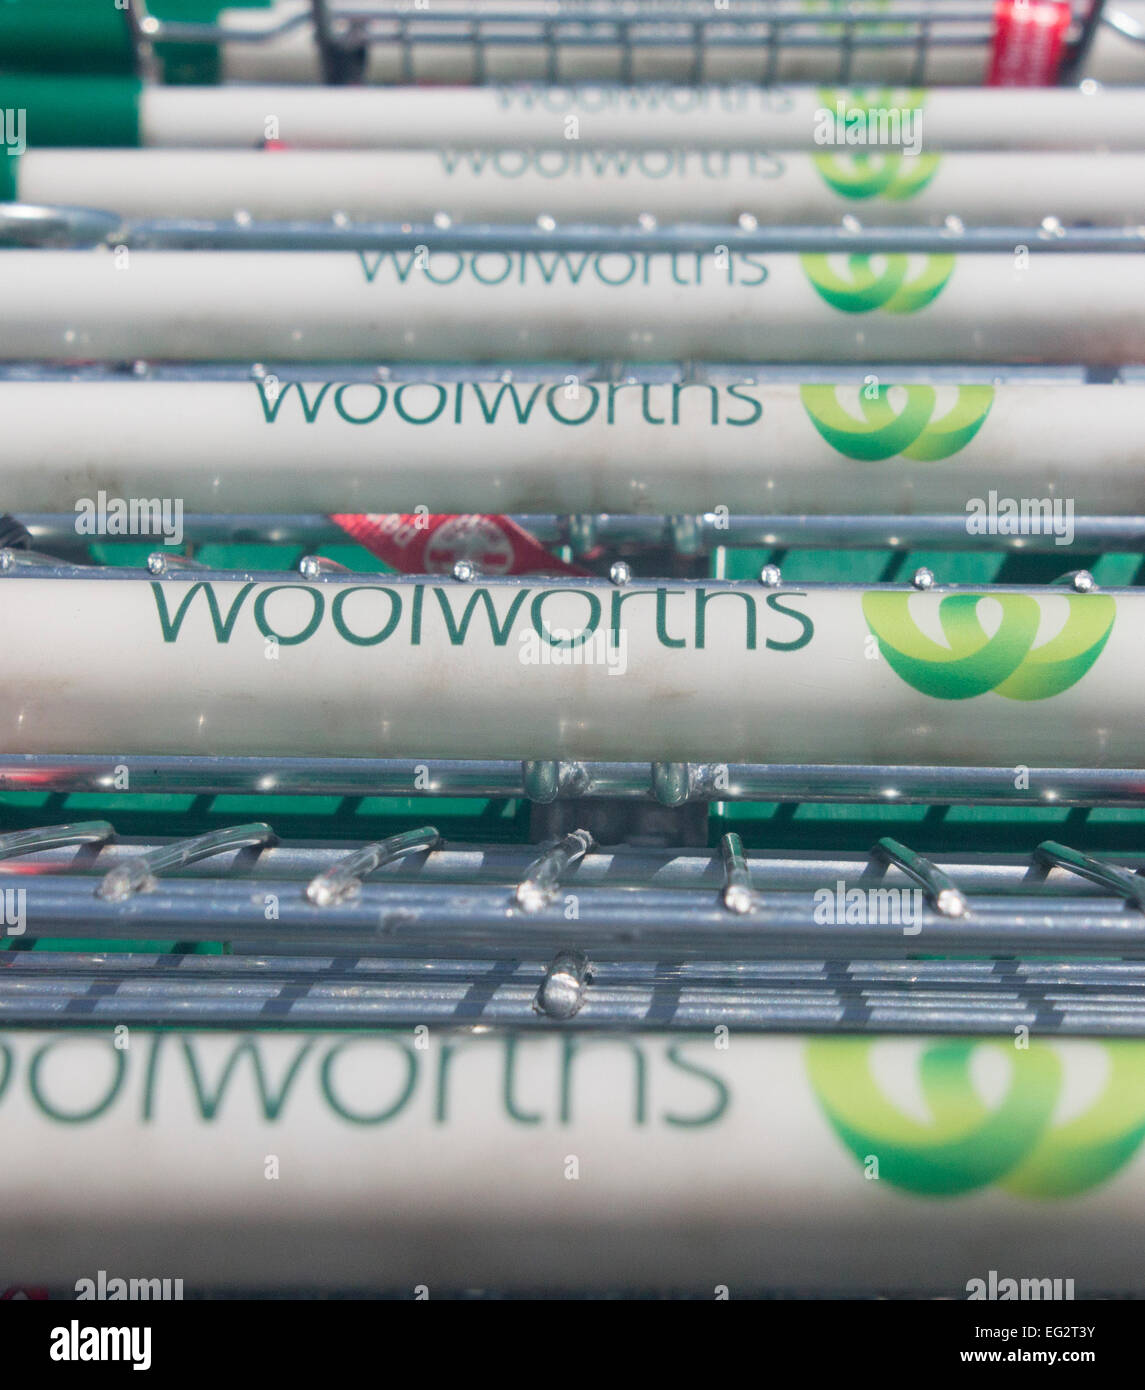 Woolworths supermarket trolleys NSW Australia Stock Photo